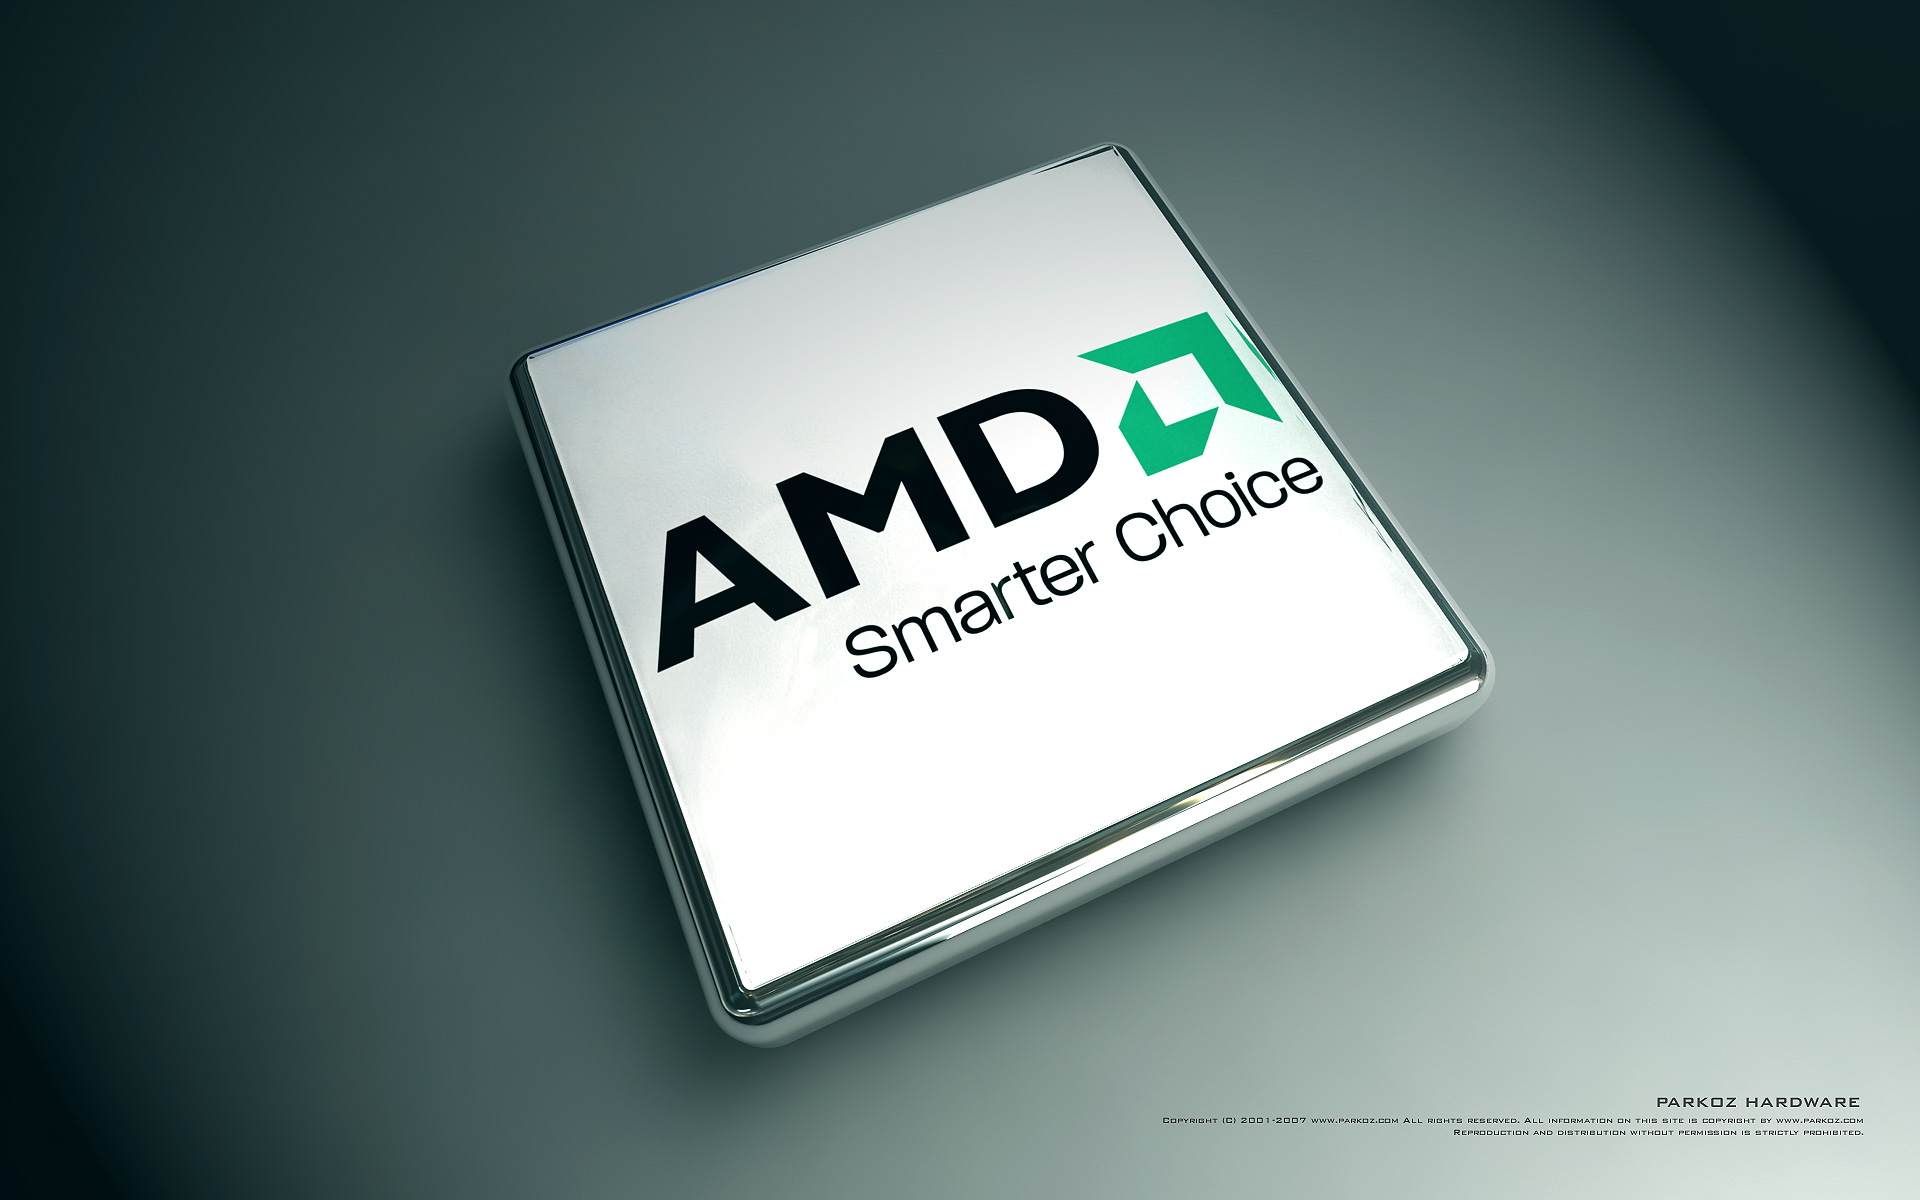 AMD Gaming Wallpapers - Wallpaper Cave